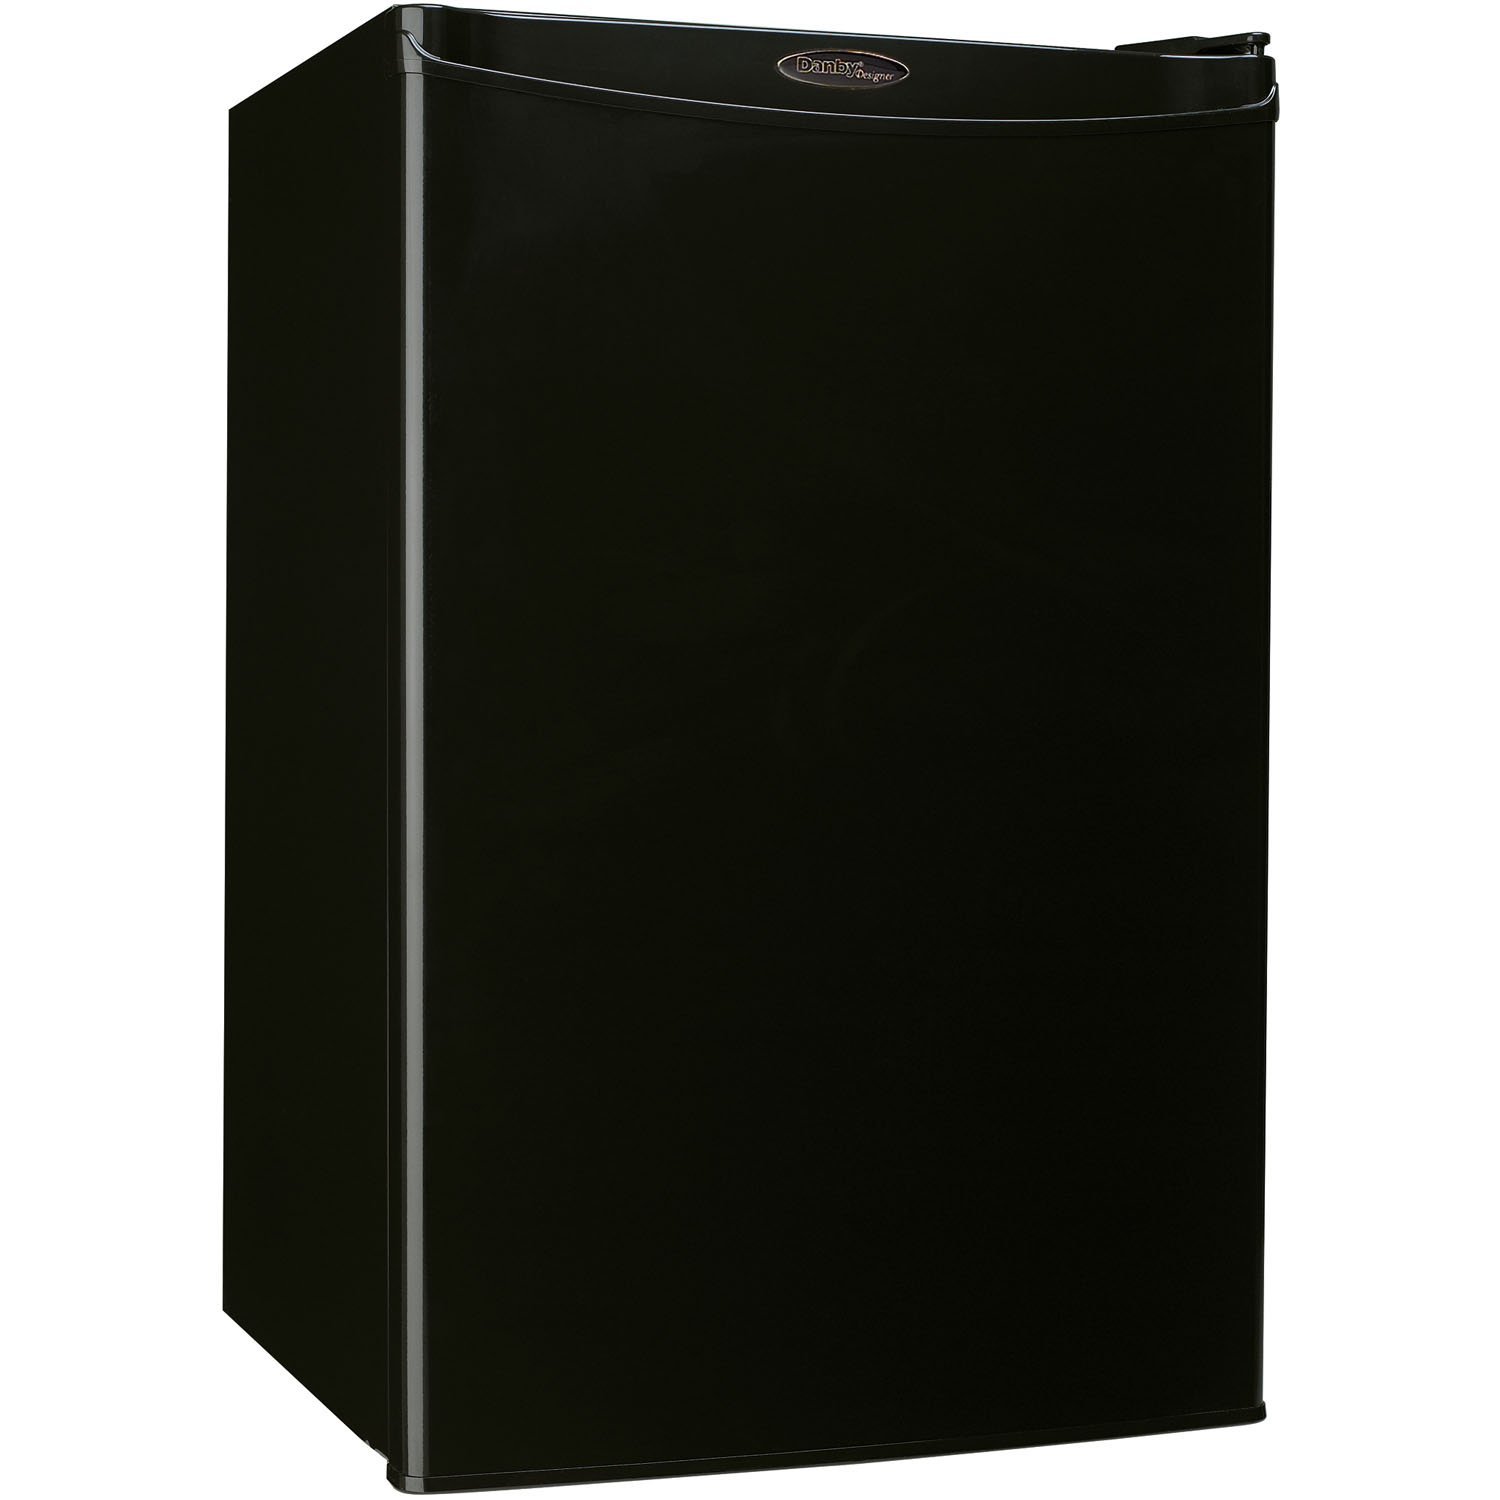 Danby Designer DCR044A2BDD Compact Refrigerator, 4.4-Cubic Feet, Black